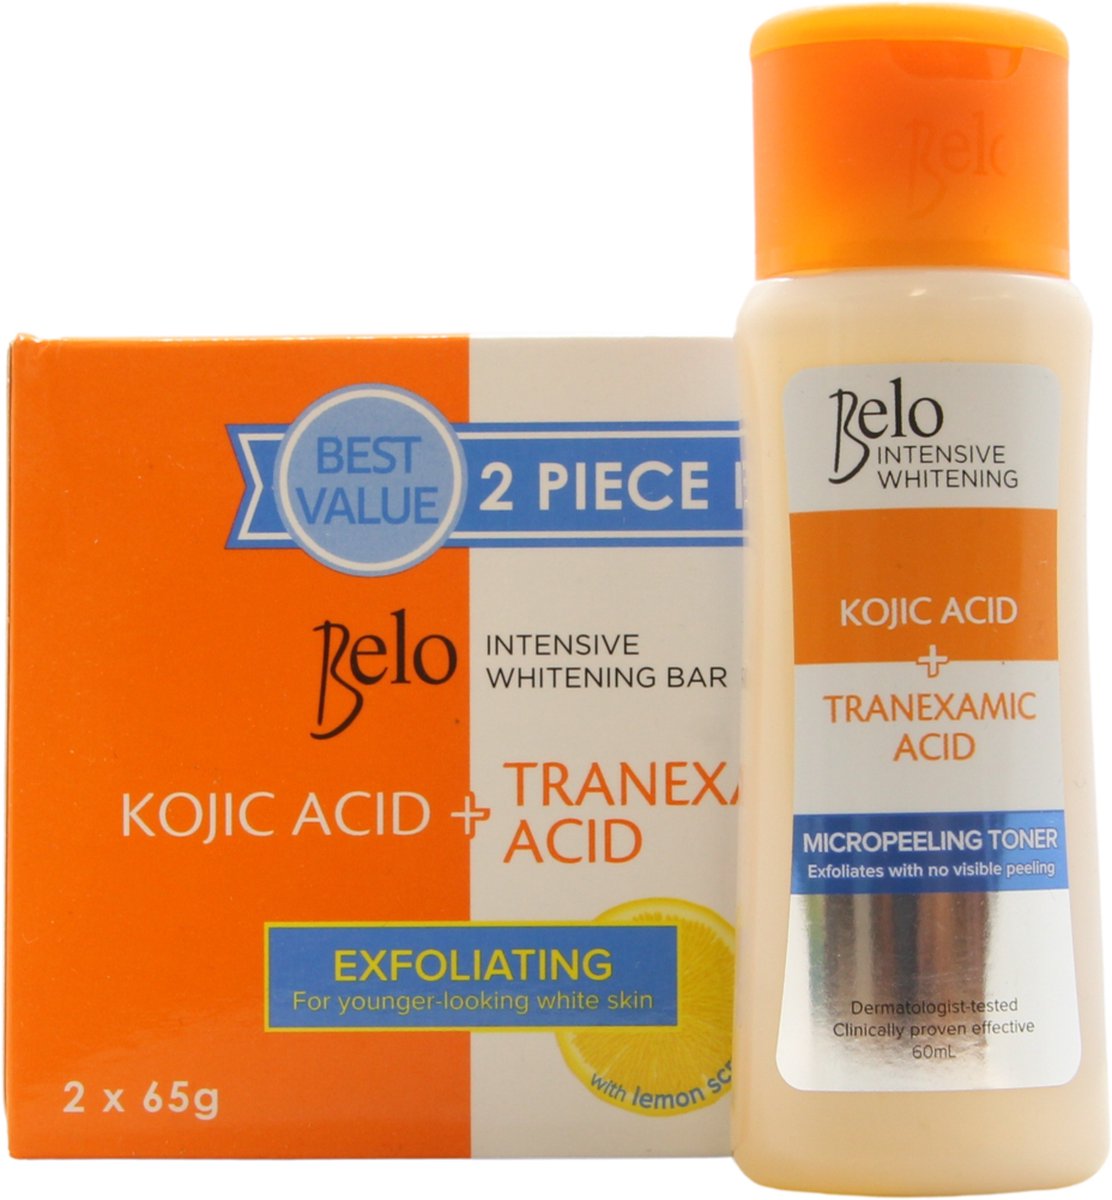 Belo intensive Whitening Micropeeling Toner + Exfoliating zeep met Kojic Acid + Tranexamic Acid -